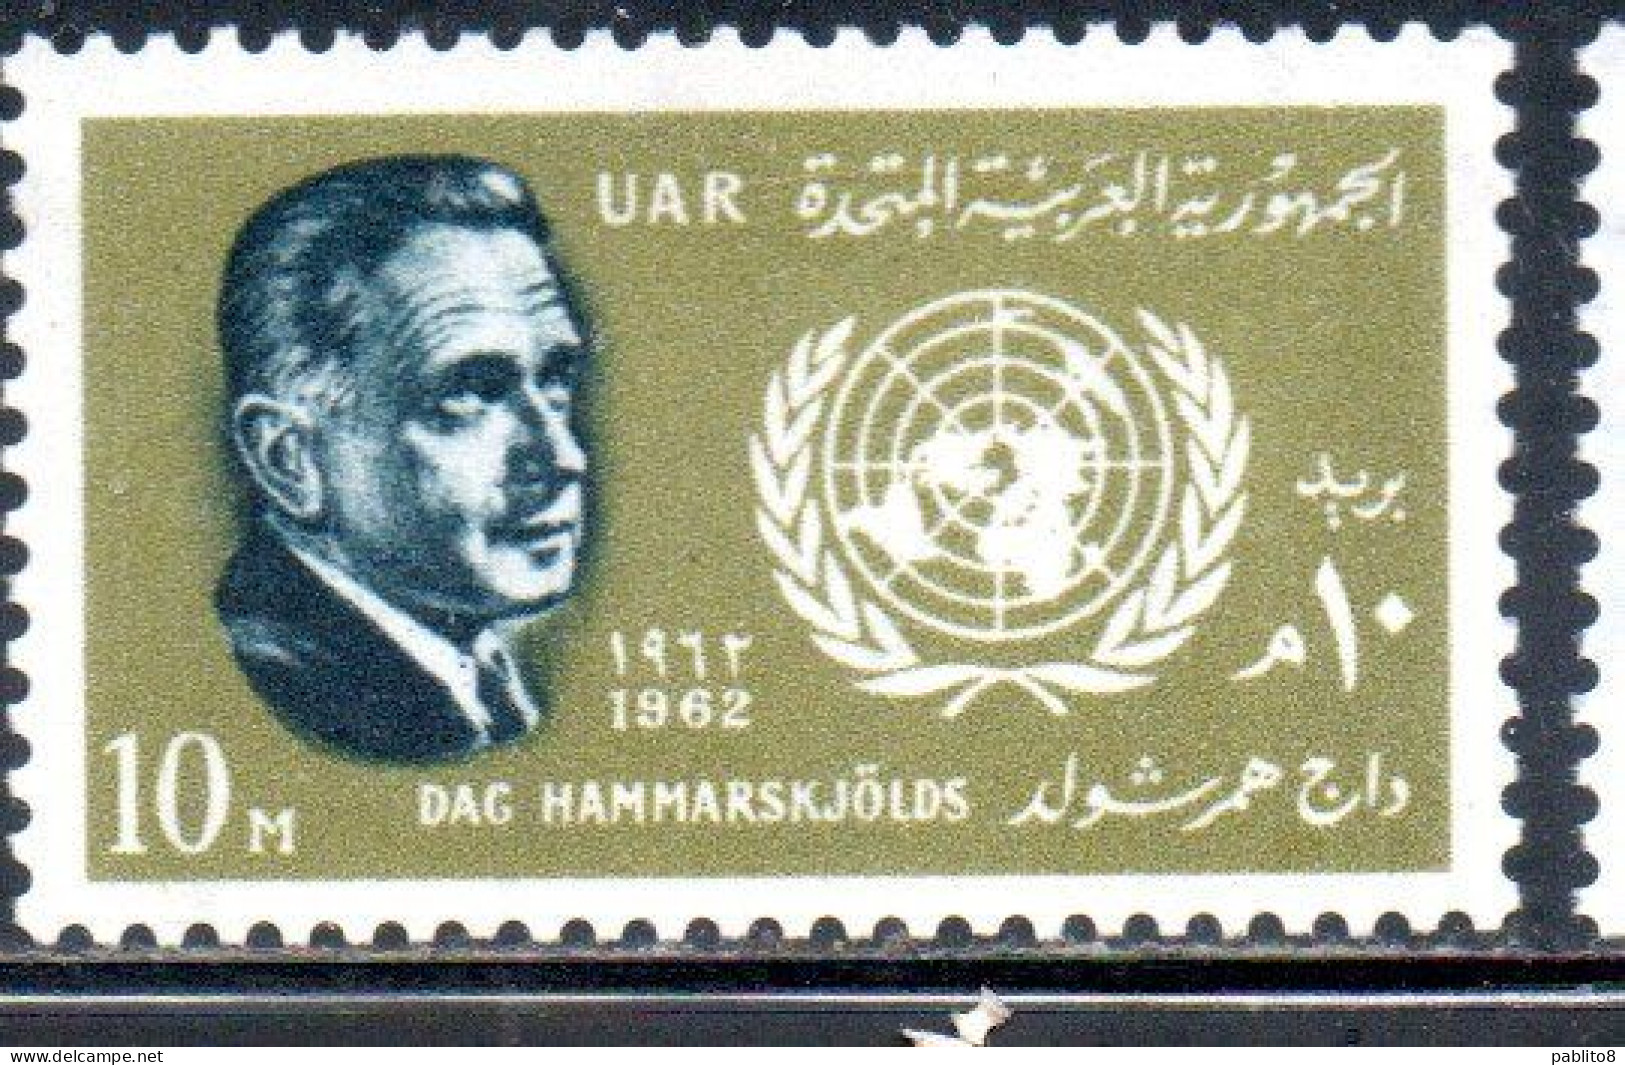 UAR EGYPT EGITTO 1962 DAG HAMMARSKJOLD SECRETARY GENERAL OF THE UN ONU 10m MH - Unused Stamps